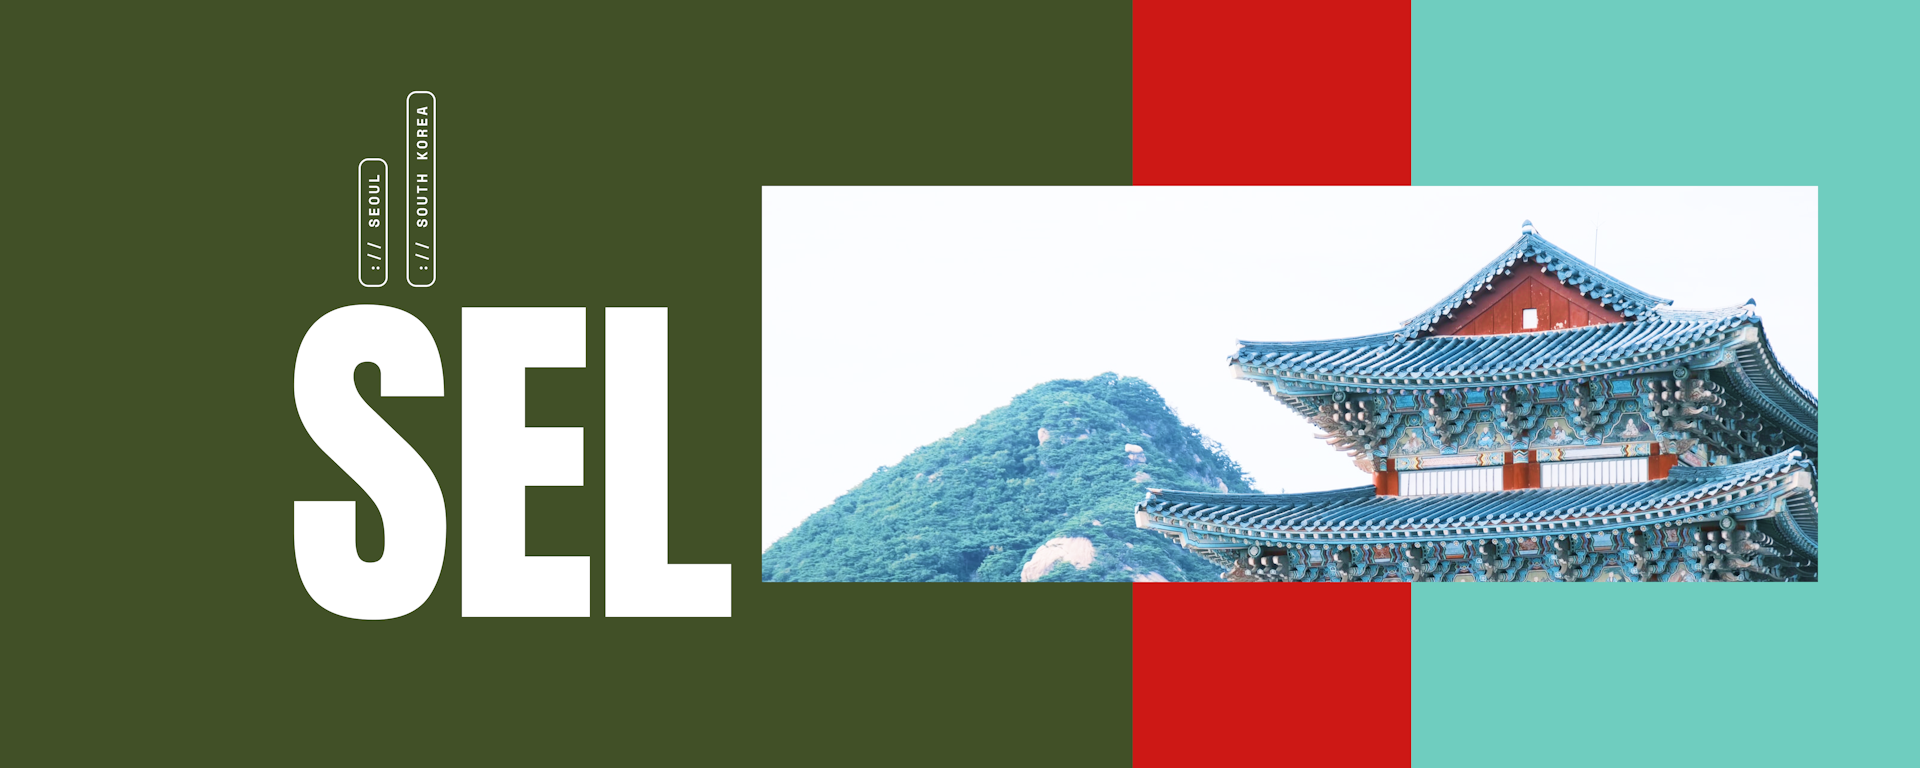 Seoul Banner